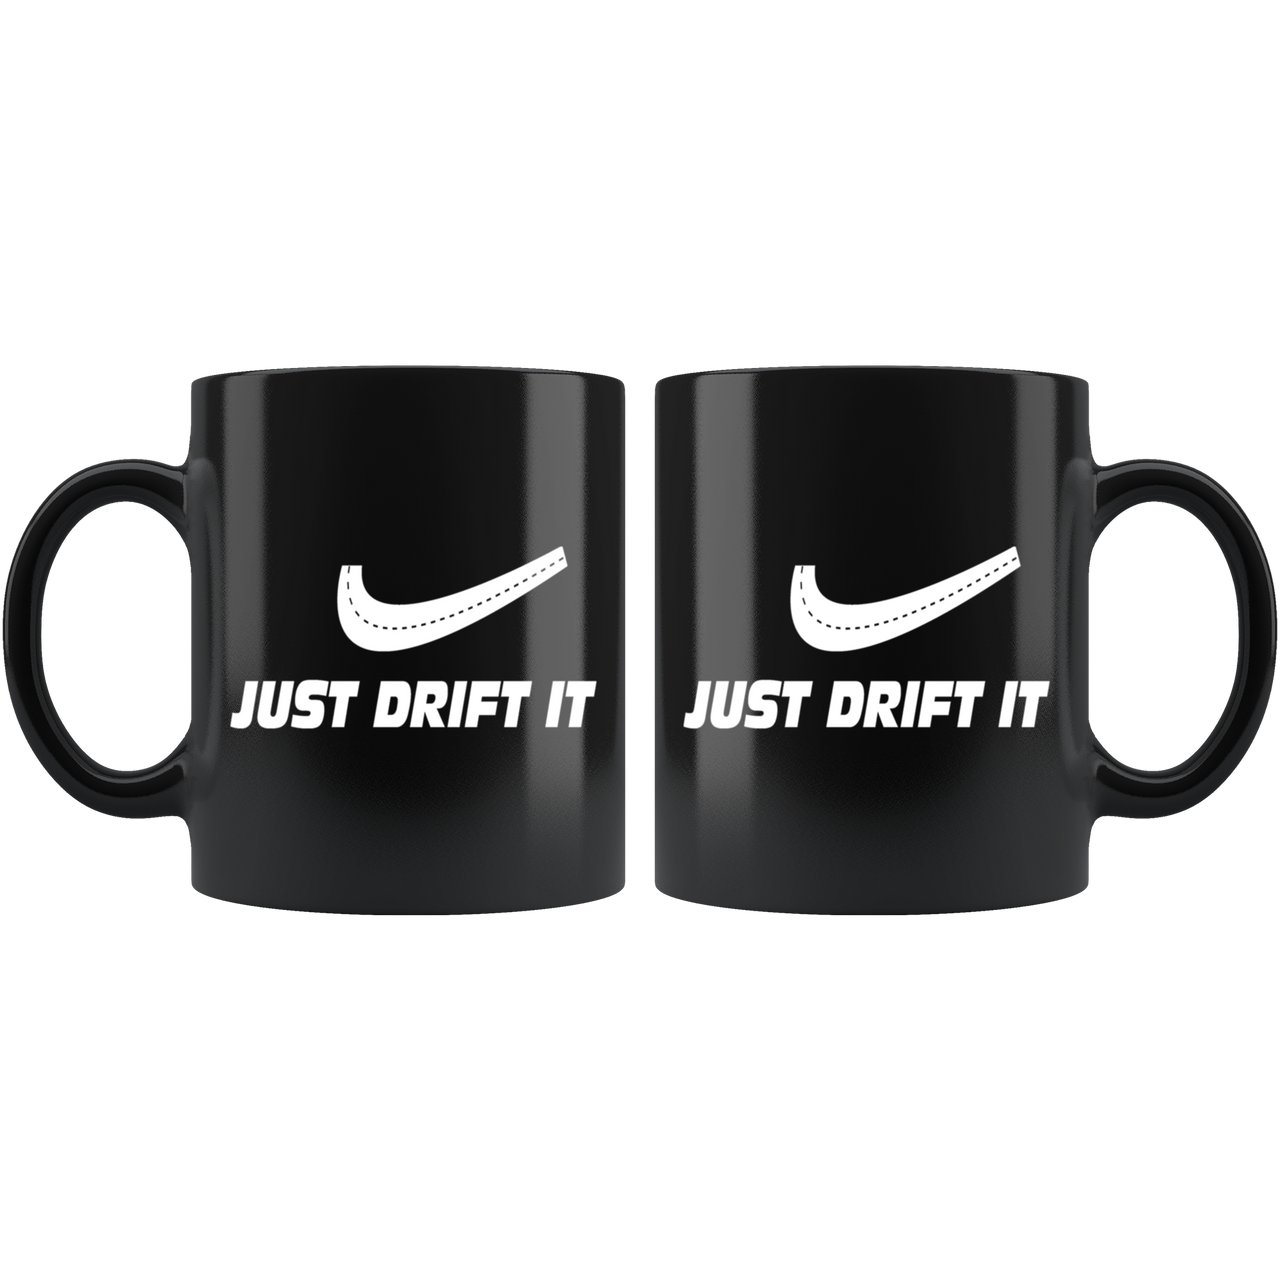 Just Drift It Mug!